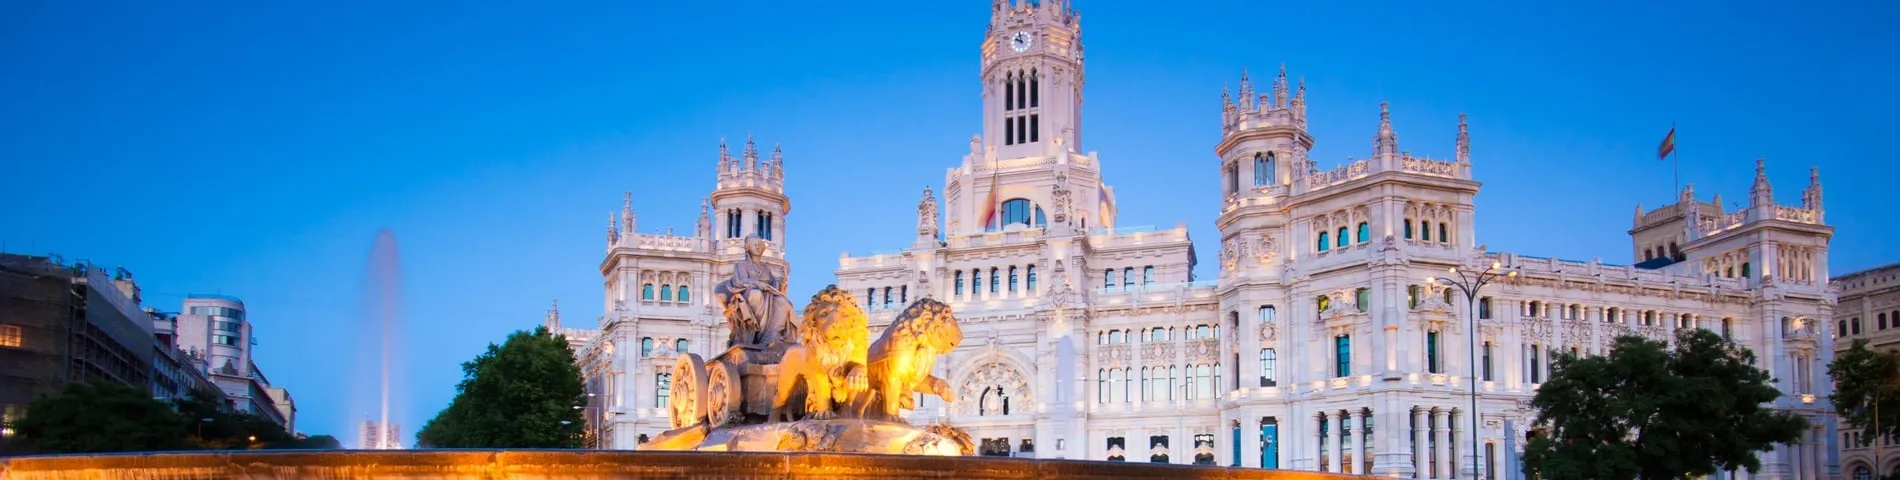 Madrid - General